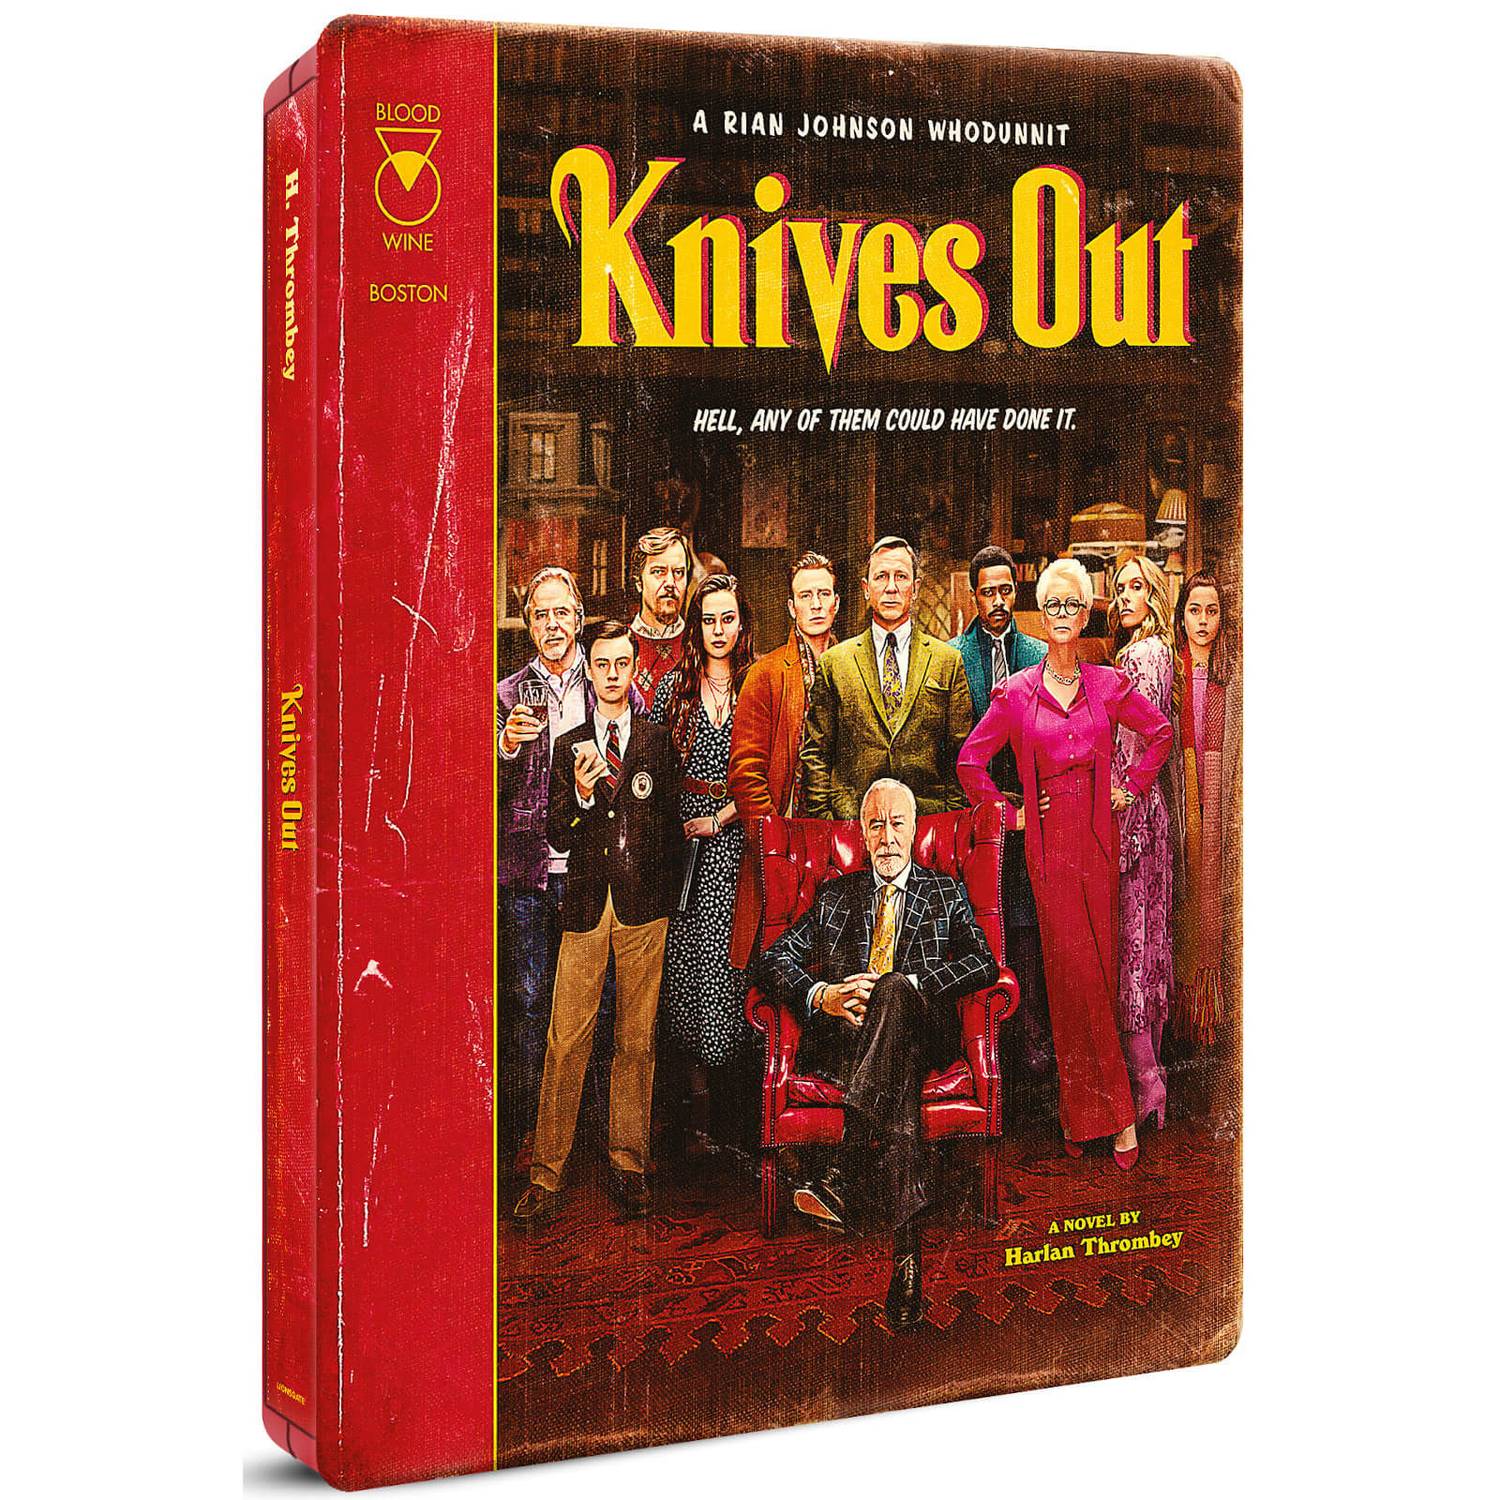 Достать ножи (2019) (англ. язык) (4K UHD + Blu-ray) Steelbook